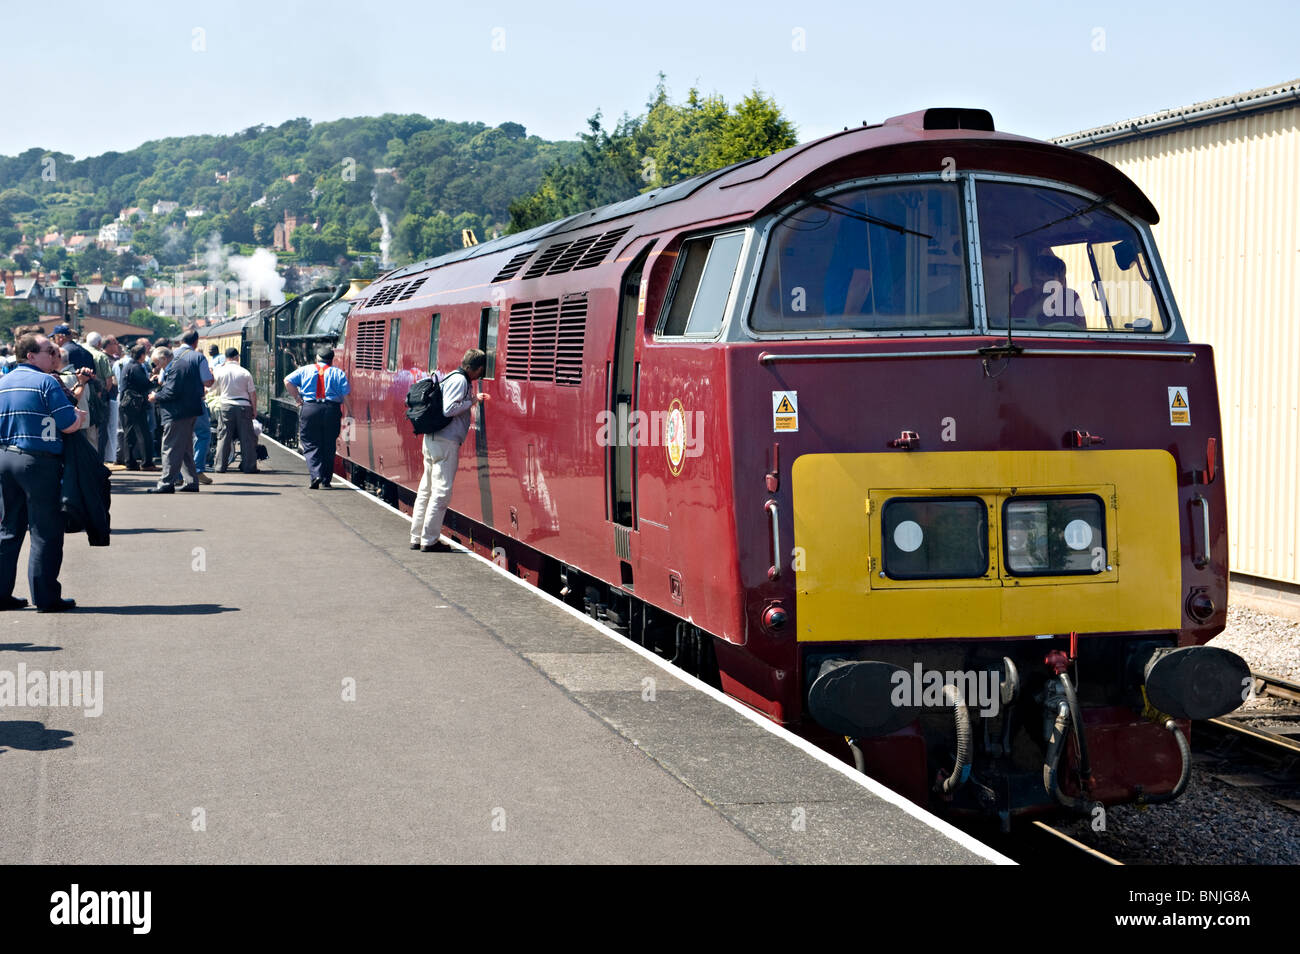 The preserved 'Western' class diesel locomotive on the West Somerset Railway, Minehead, Devon, UK Stock Photo